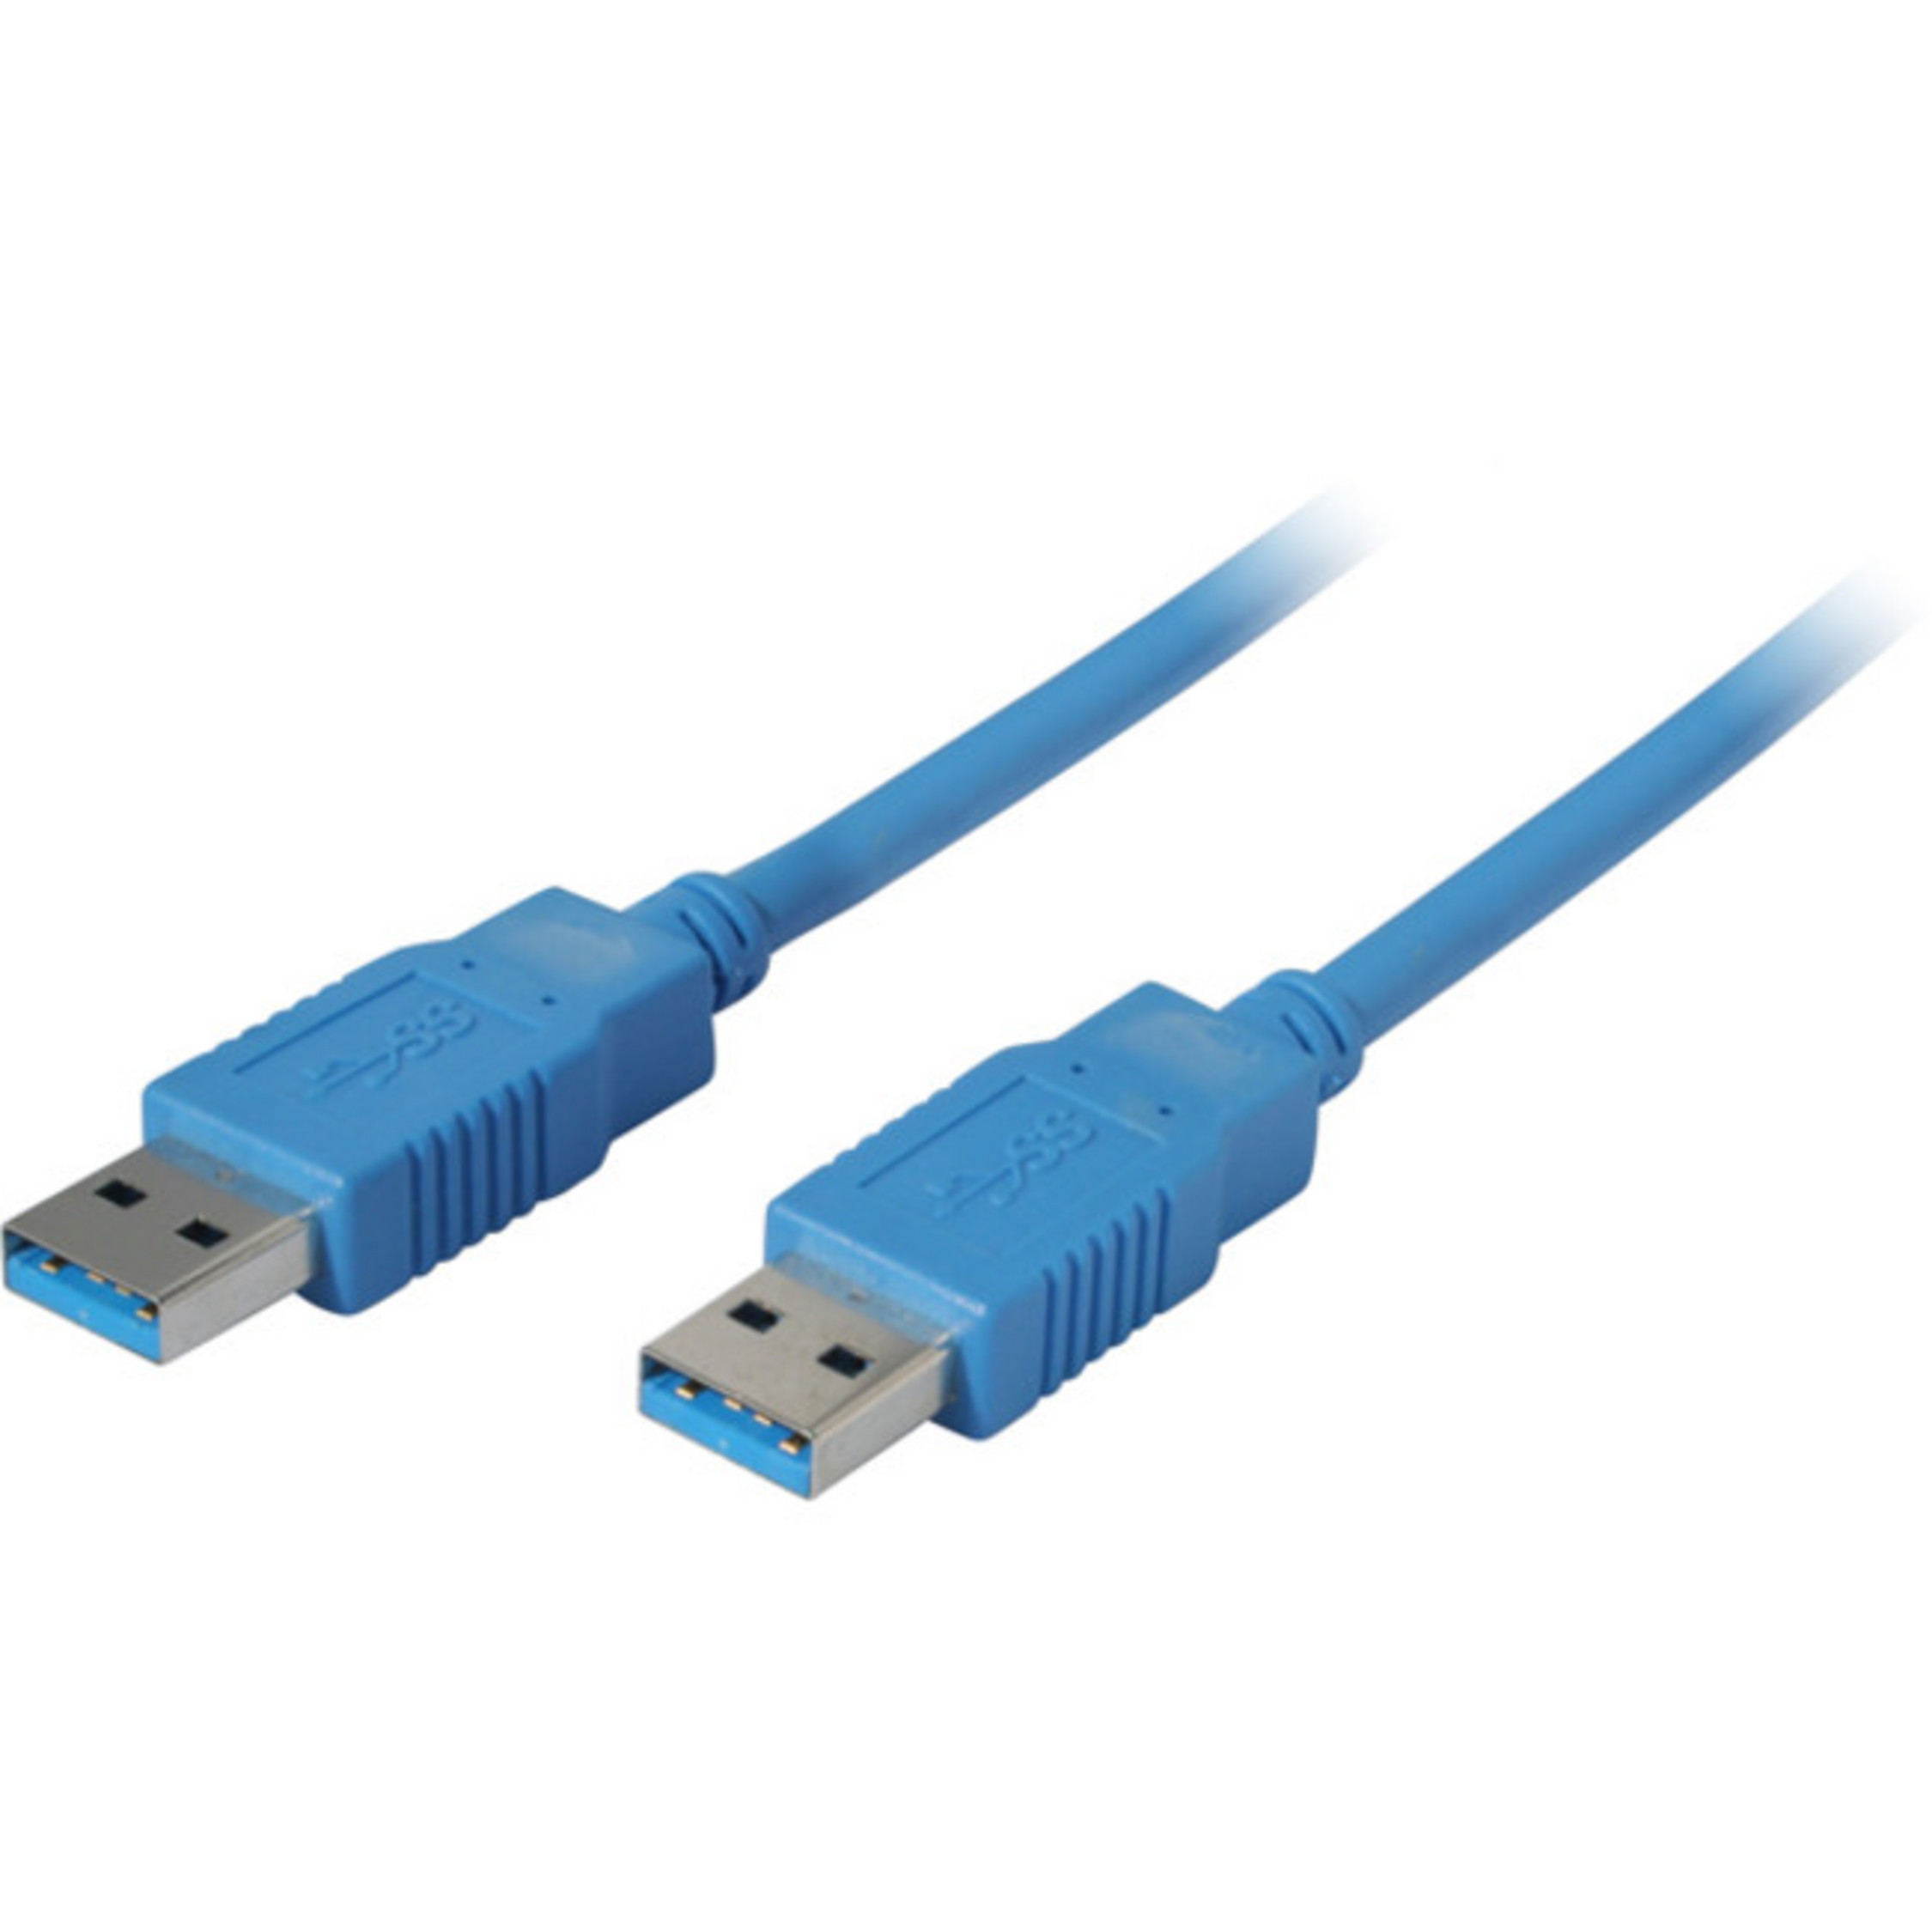 S/CONN MAXIMUM CONNECTIVITY USB USB 5m blau USB A Stecker Kabel / Stecker Kabel 3.0 A